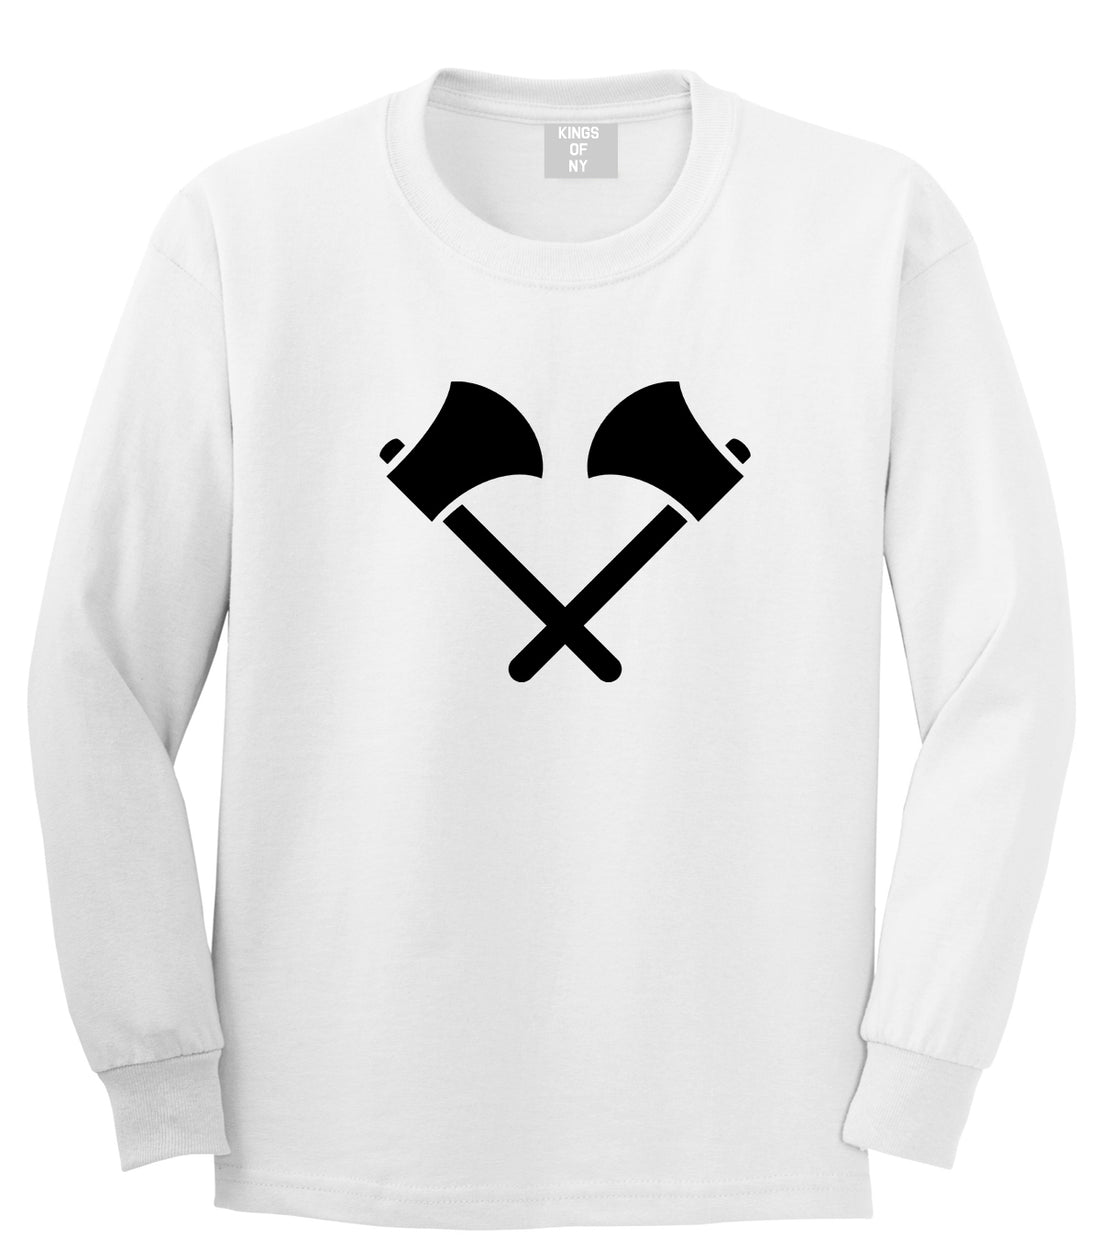 2 Ax Fireman Logo White Long Sleeve T-Shirt by Kings Of NY